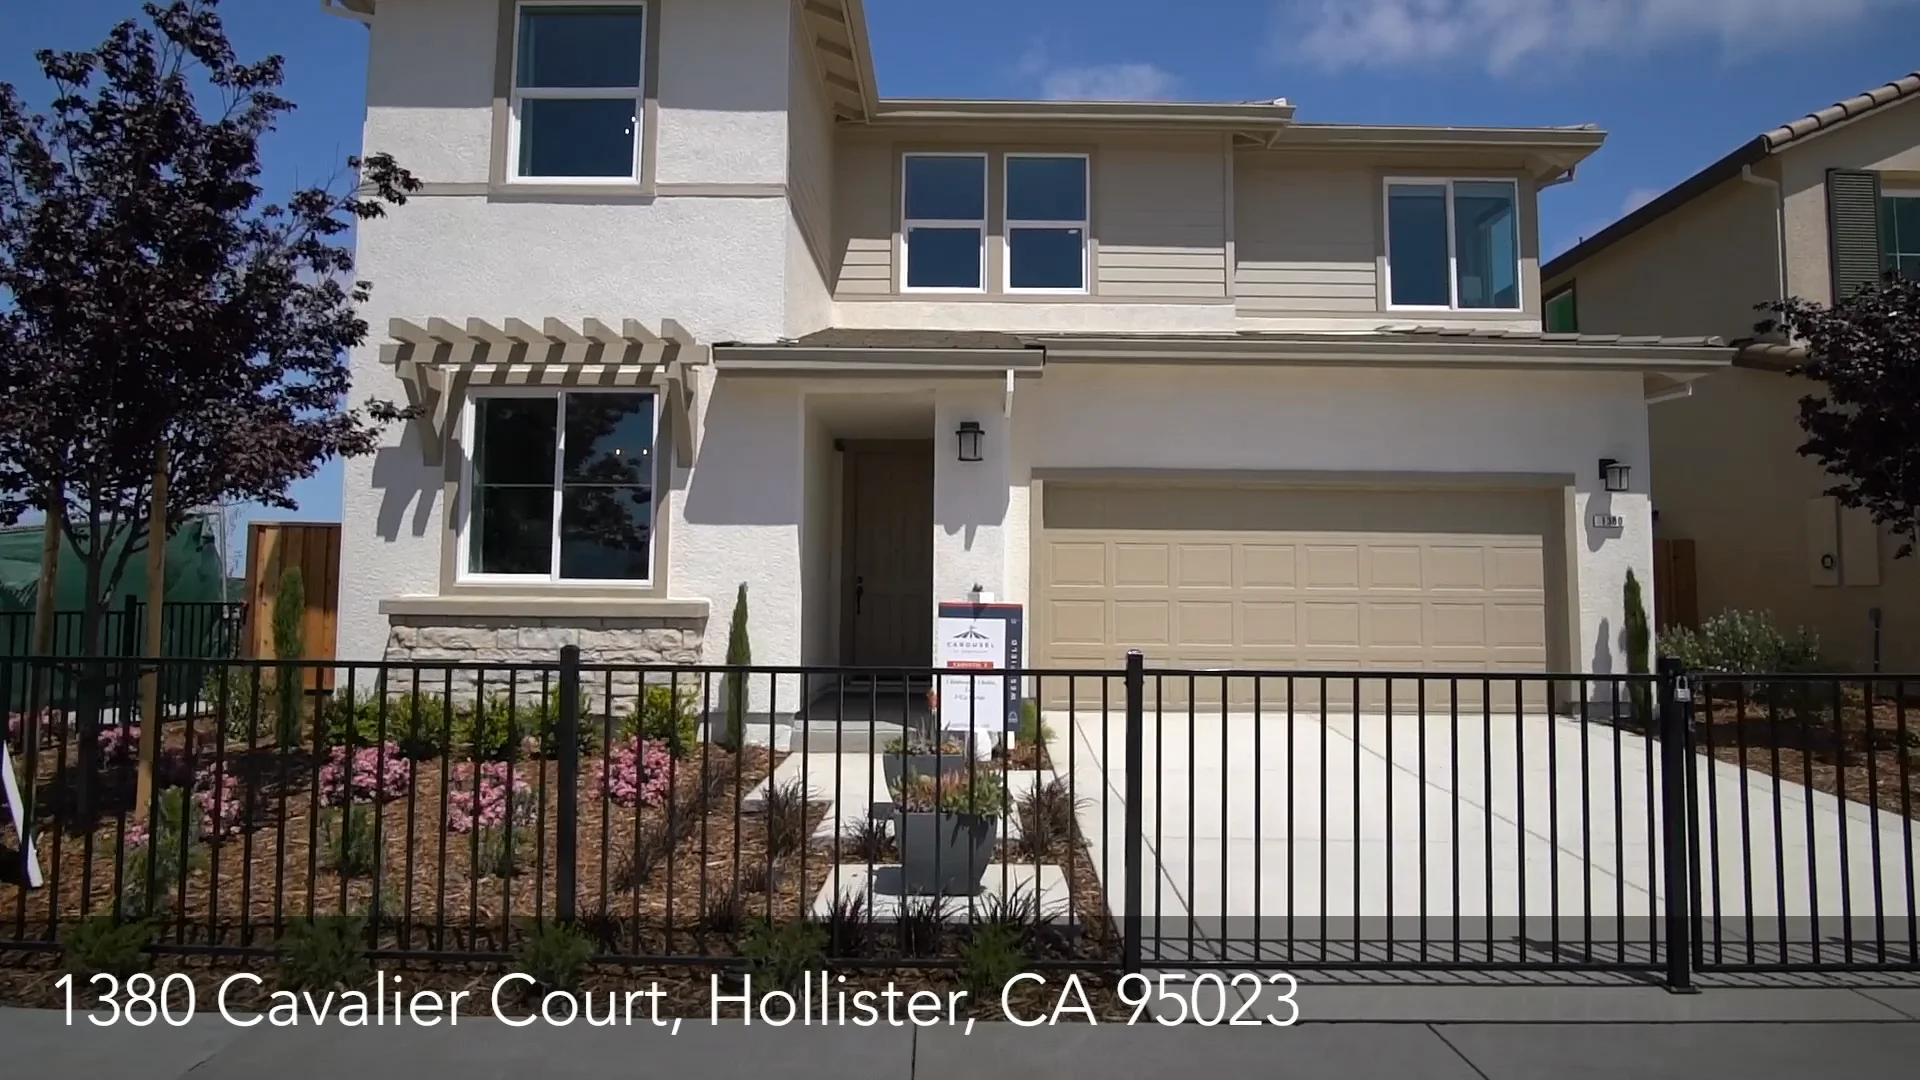 1380 Cavalier Court, Hollister, CA 95023 on Vimeo